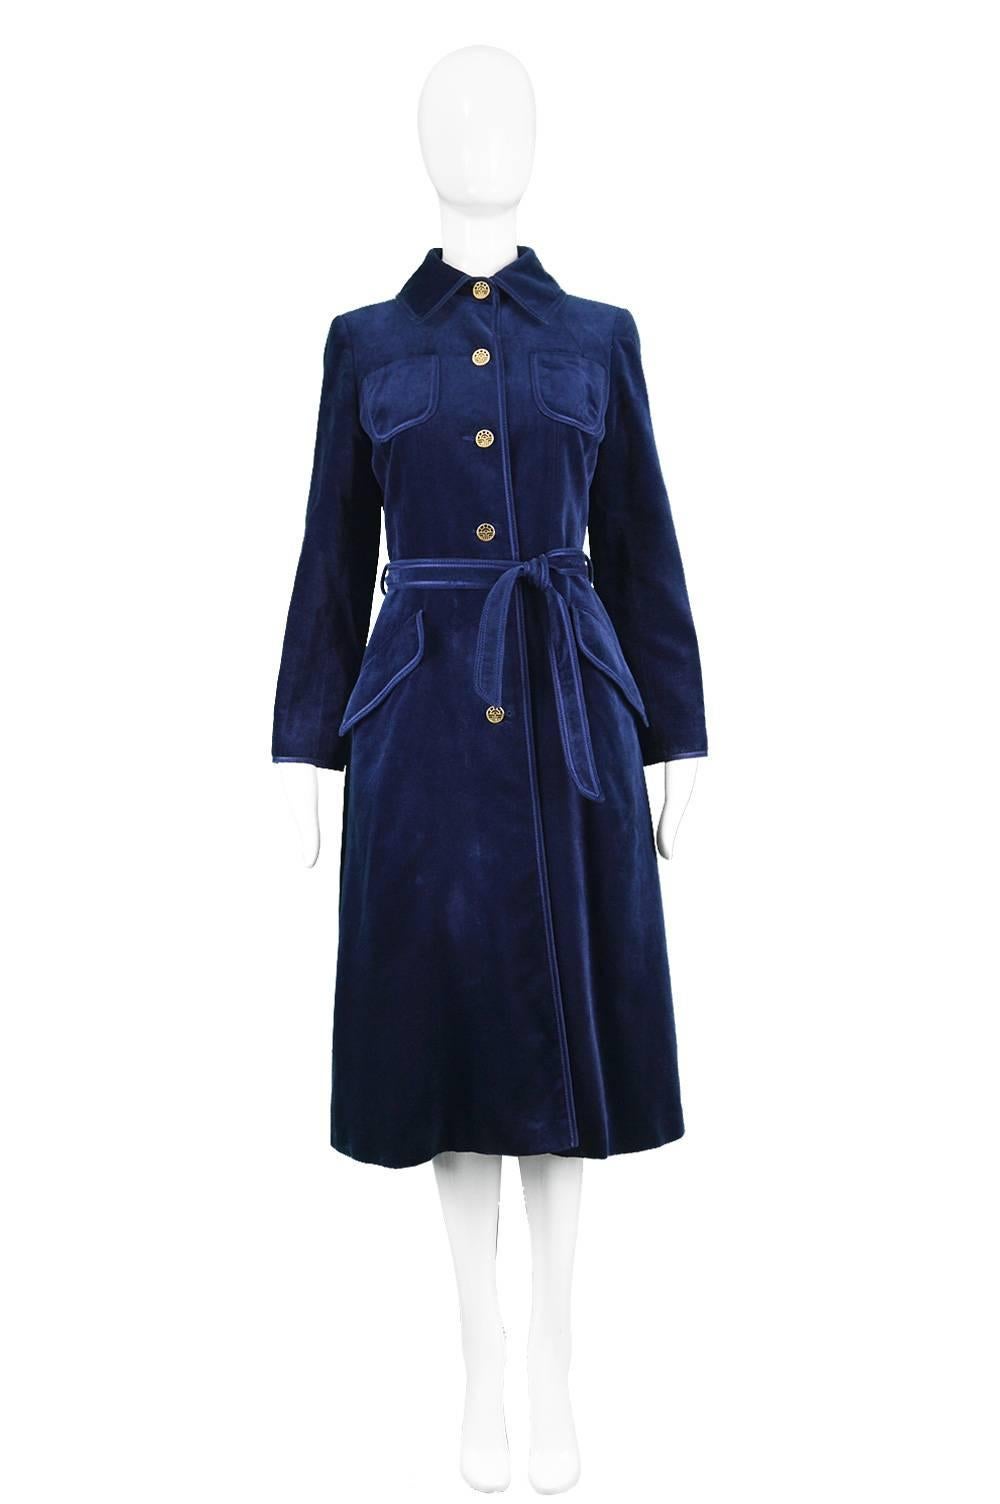 Louis Feraud Vintage 1970s Women's Midnight Blue Velvet Belted Trenchcoat

Estimated Size: UK 8-10/ US 4-6/ EU 36-38. Please check measurements.  
Bust - 34” / 86cm
Waist - 28” / 71cm
Hips - 40” / 101cm
Length (Shoulder to Hem) - 44” /